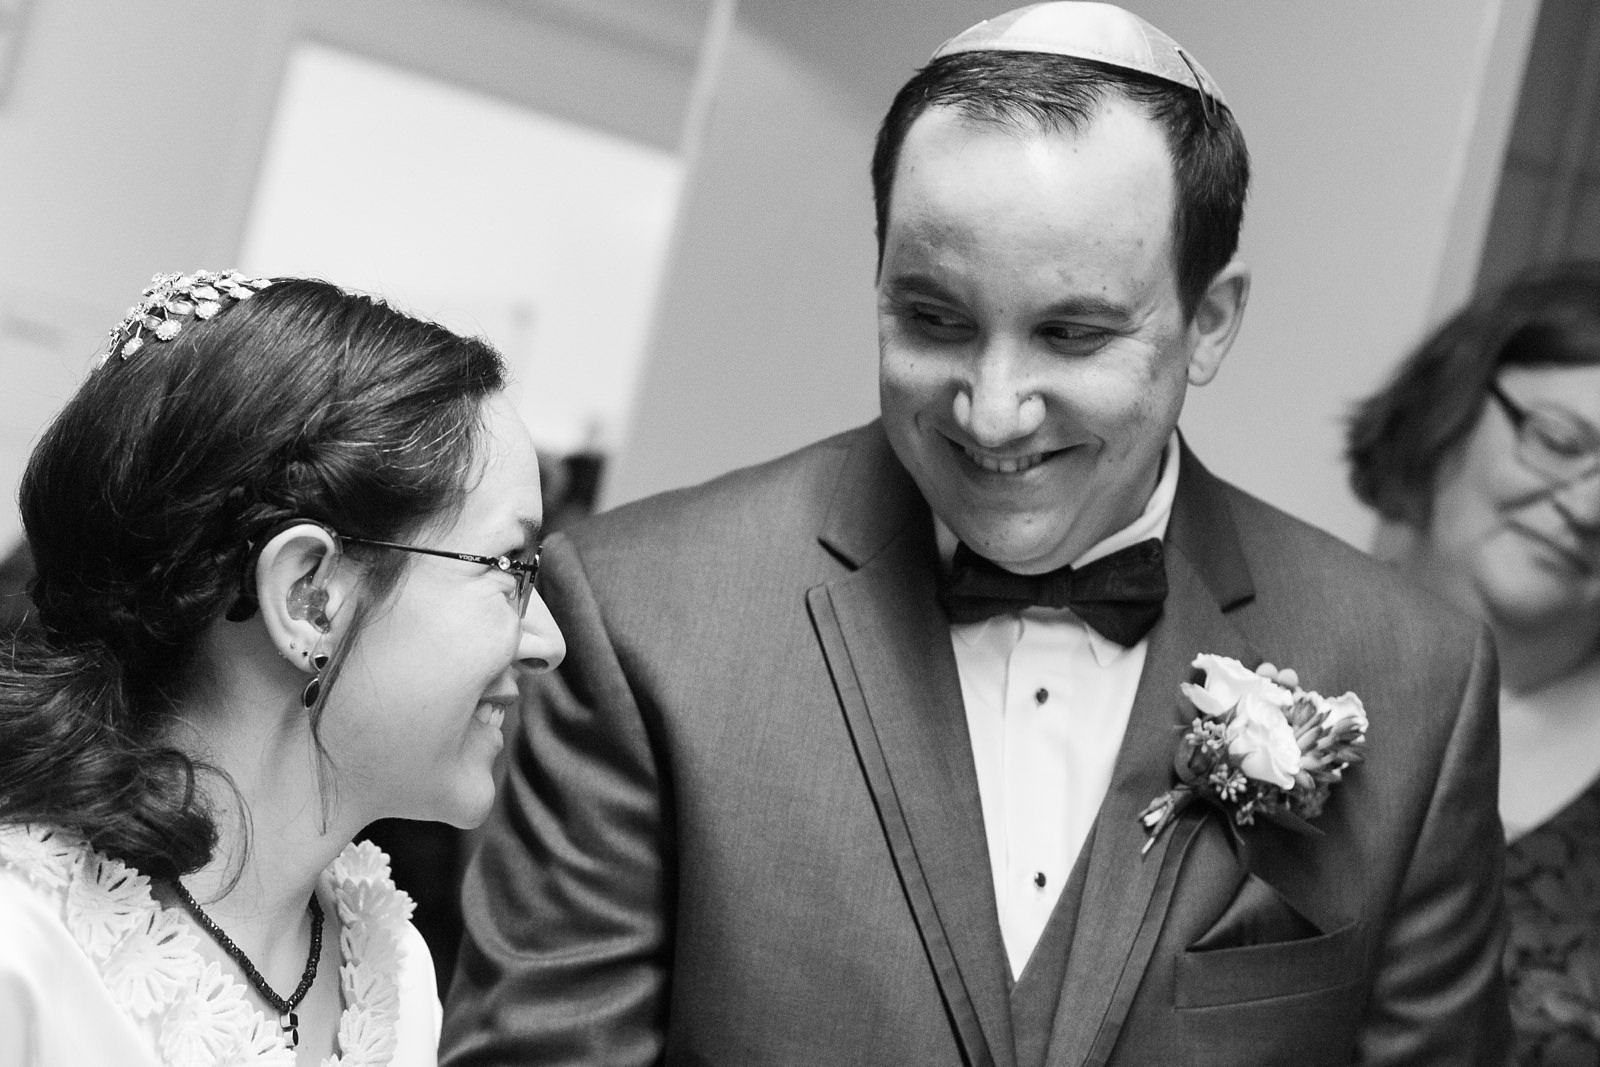 Carmichael Congregation Beth Shalom Jewish Wedding By Adrienne and Dani Photography